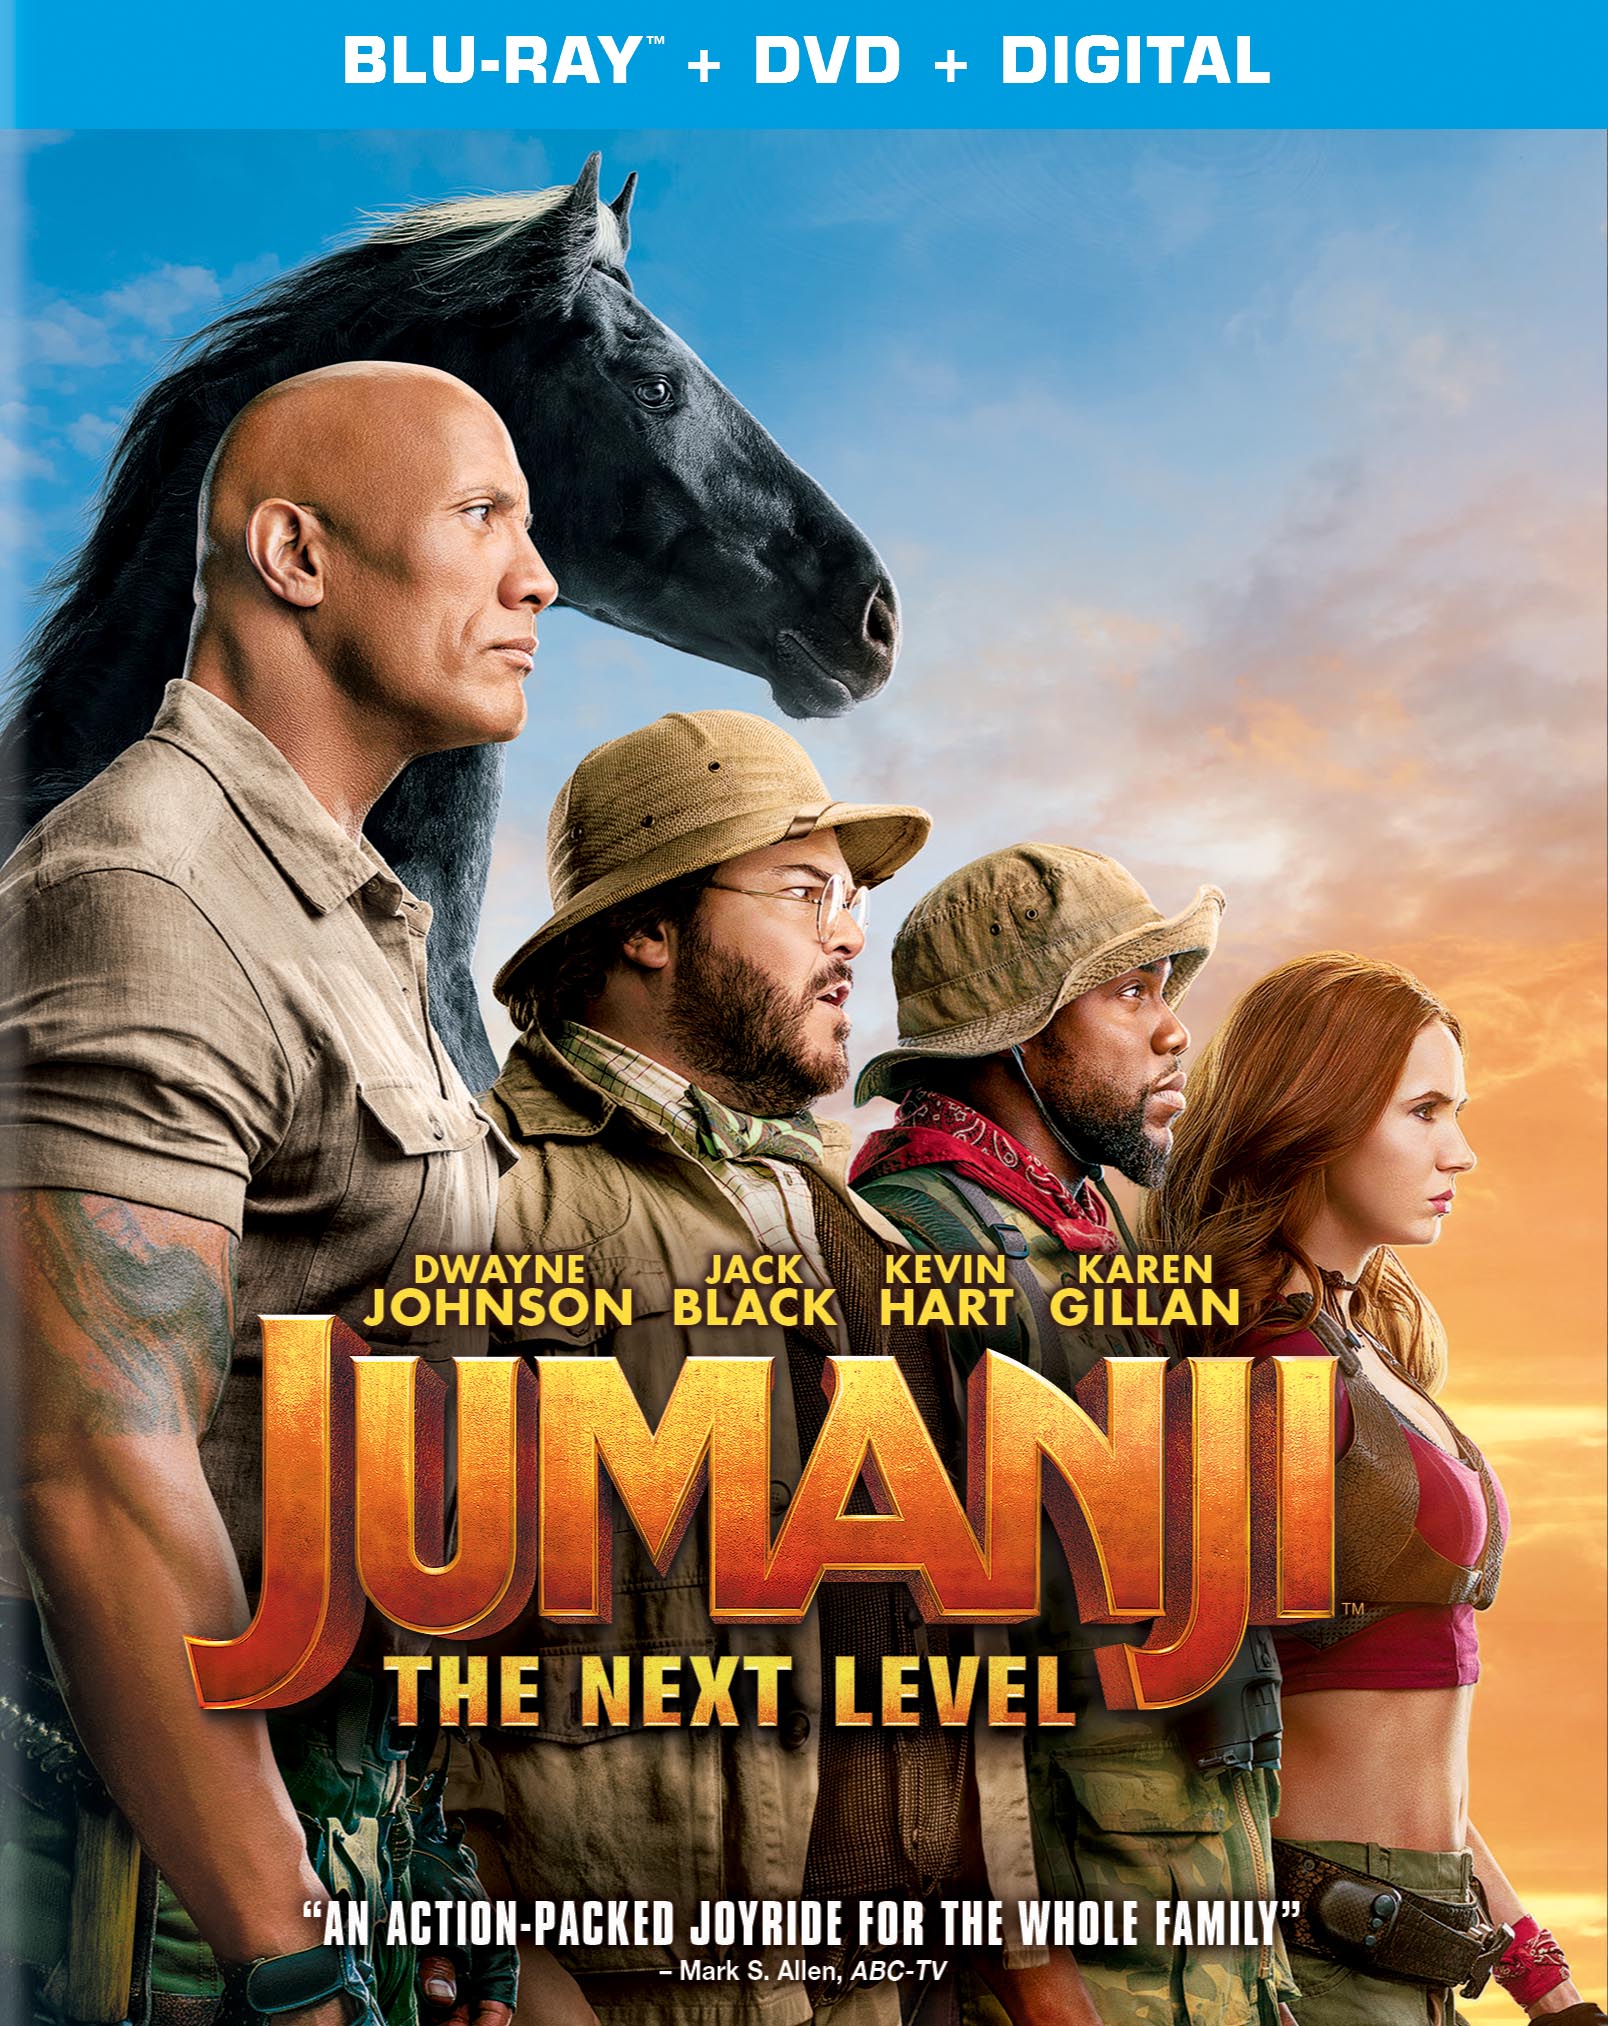 JUMANJU: THE NEXT LEVEL on Blu-ray and DVD